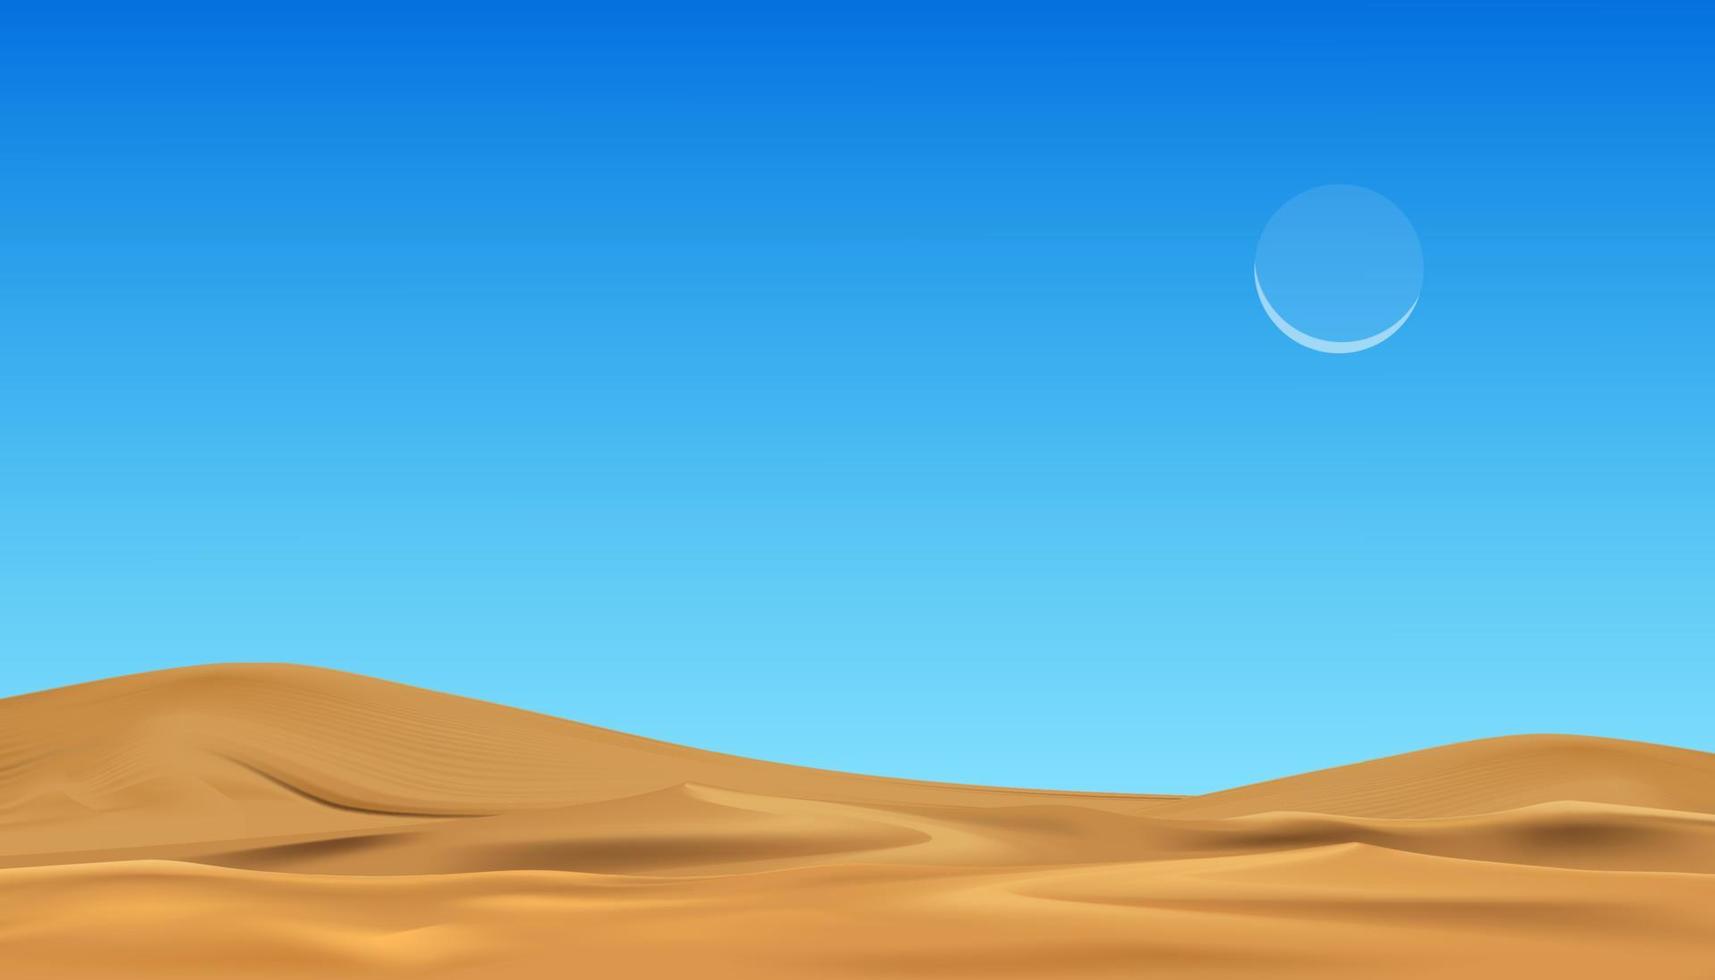 Sand Beach and Blue Sky,Desert Landscape Sand Dunes with Crescent Moon on Clear Sky,Vector Islamic,Muslims religion month of Generous Ramadan,New Moon,Prayer time.Eid Mubarak,Eid al Adha,Eid al Fitr vector